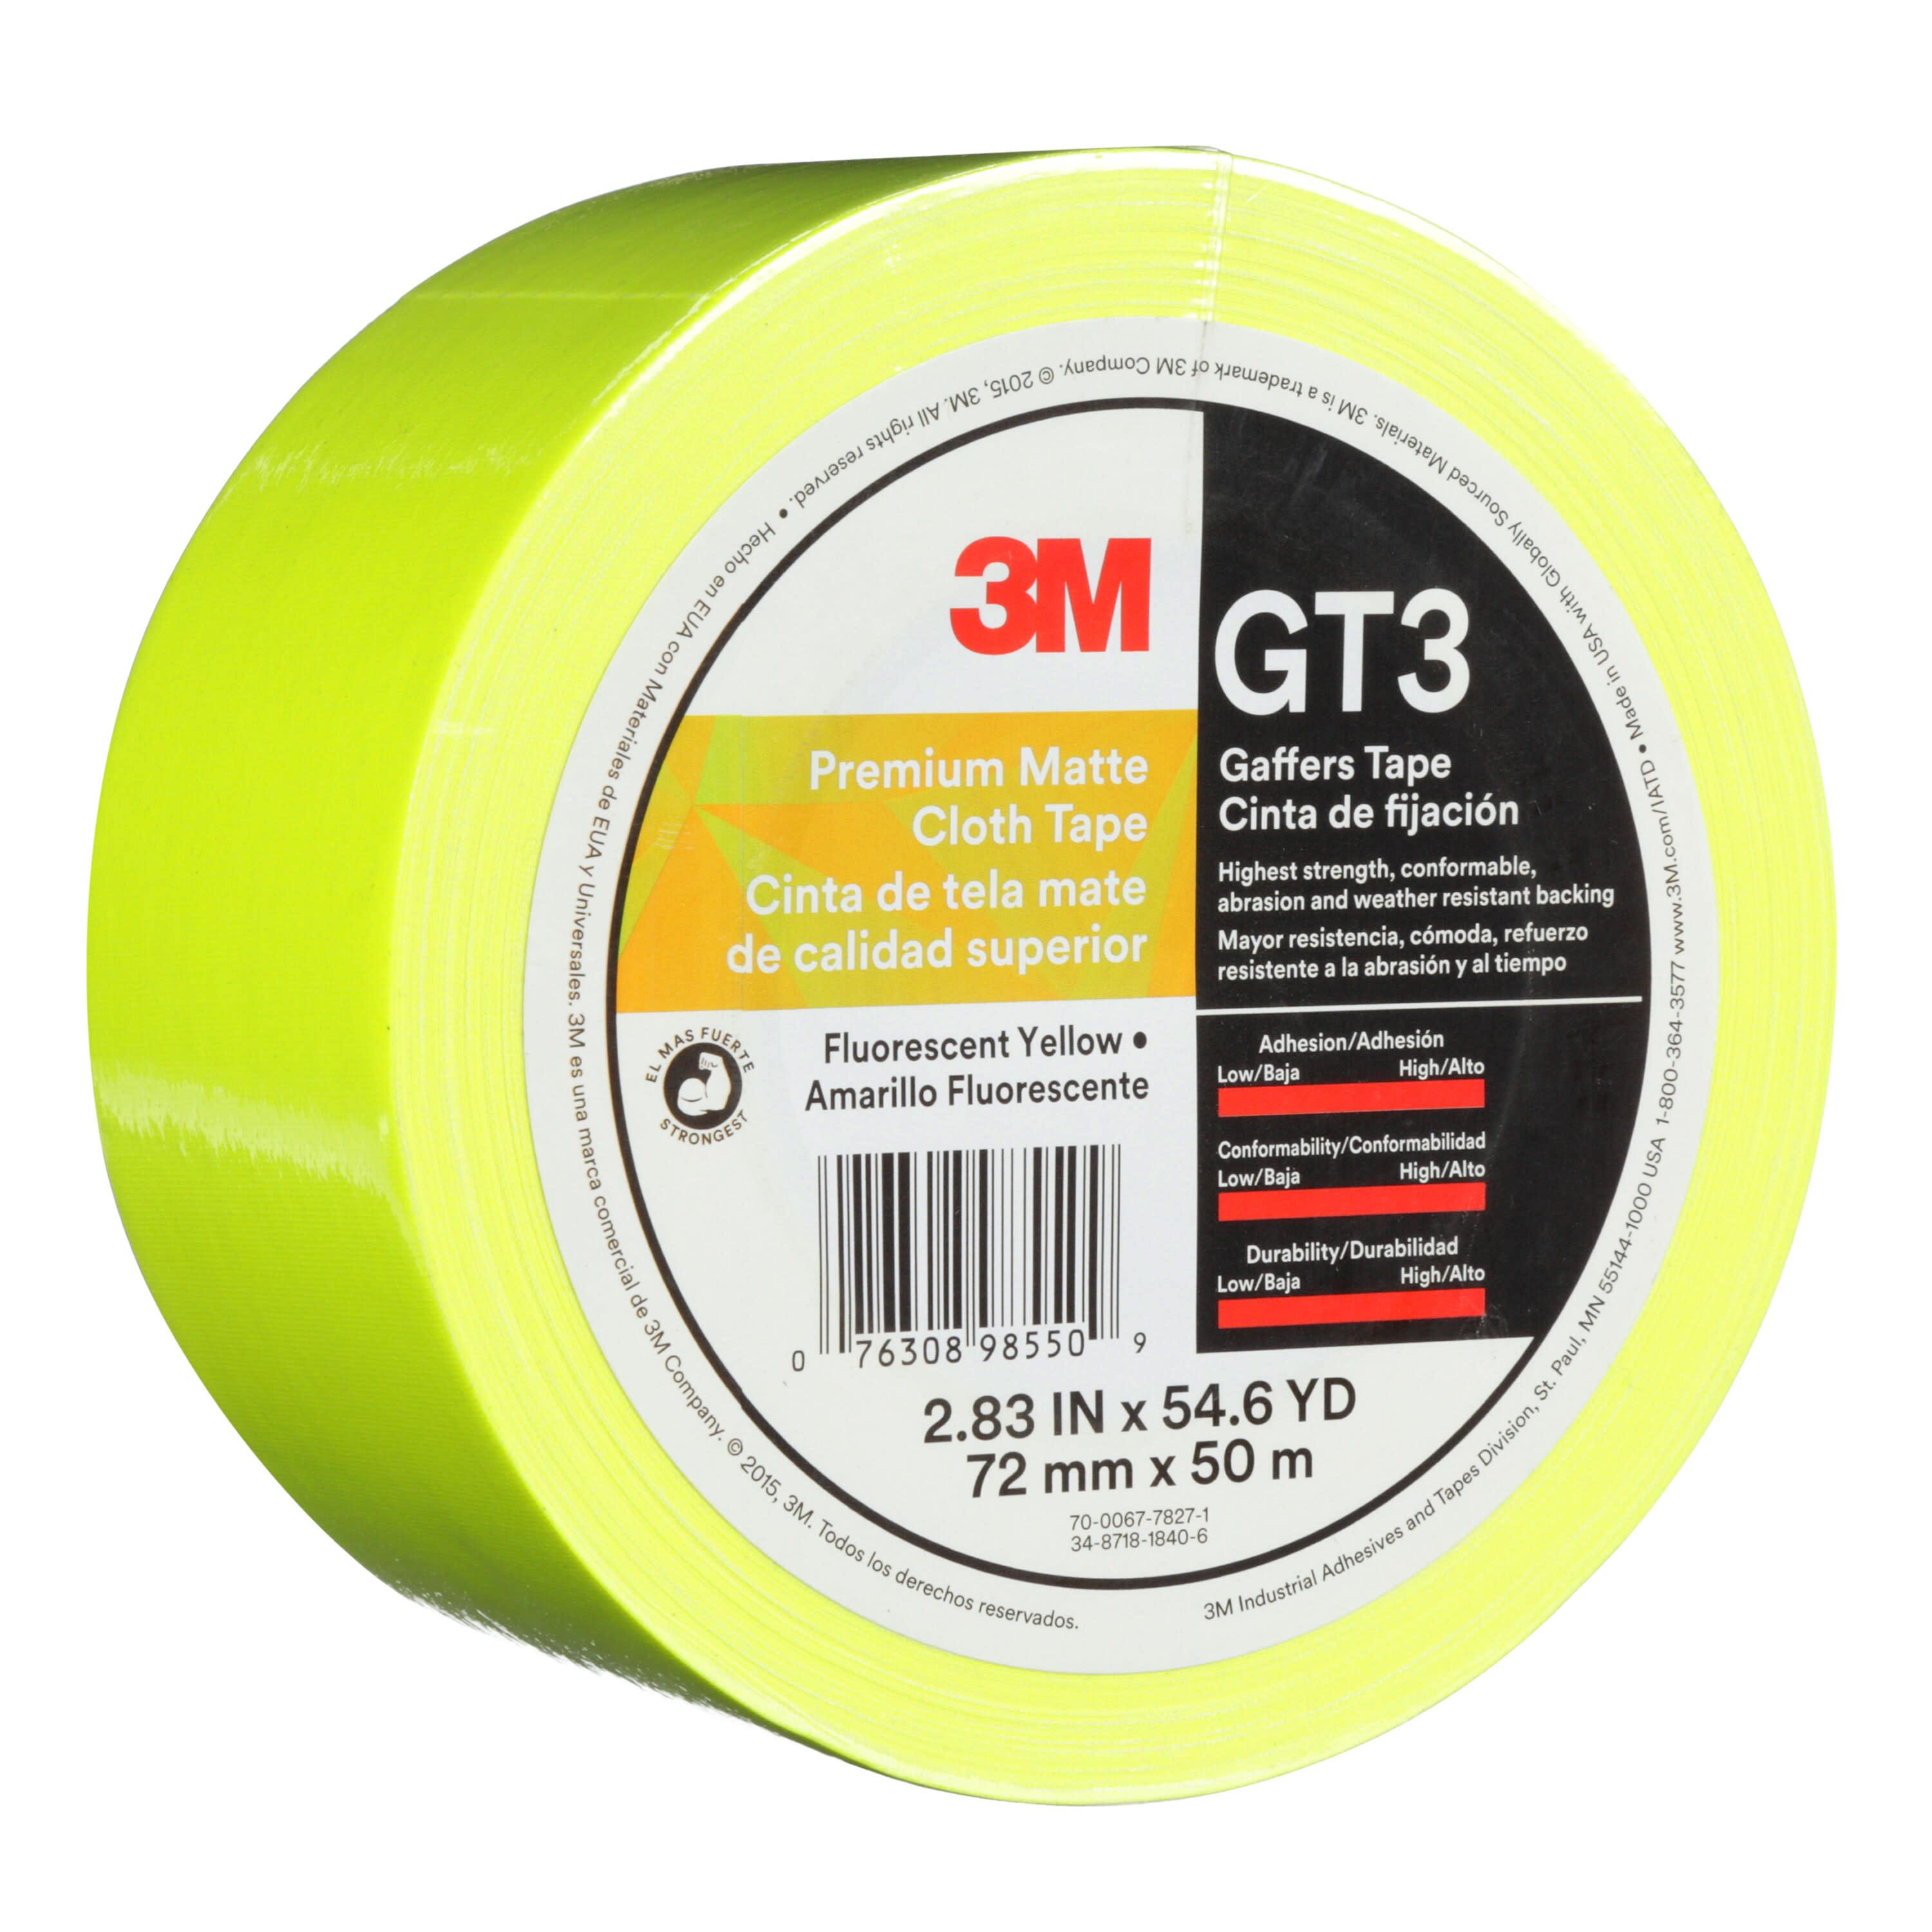 3M™ Premium Matte Cloth (Gaffers) Tape GT3, Fluorescent Yellow, 72 mm x
50 m, 11 mil, 16 per case